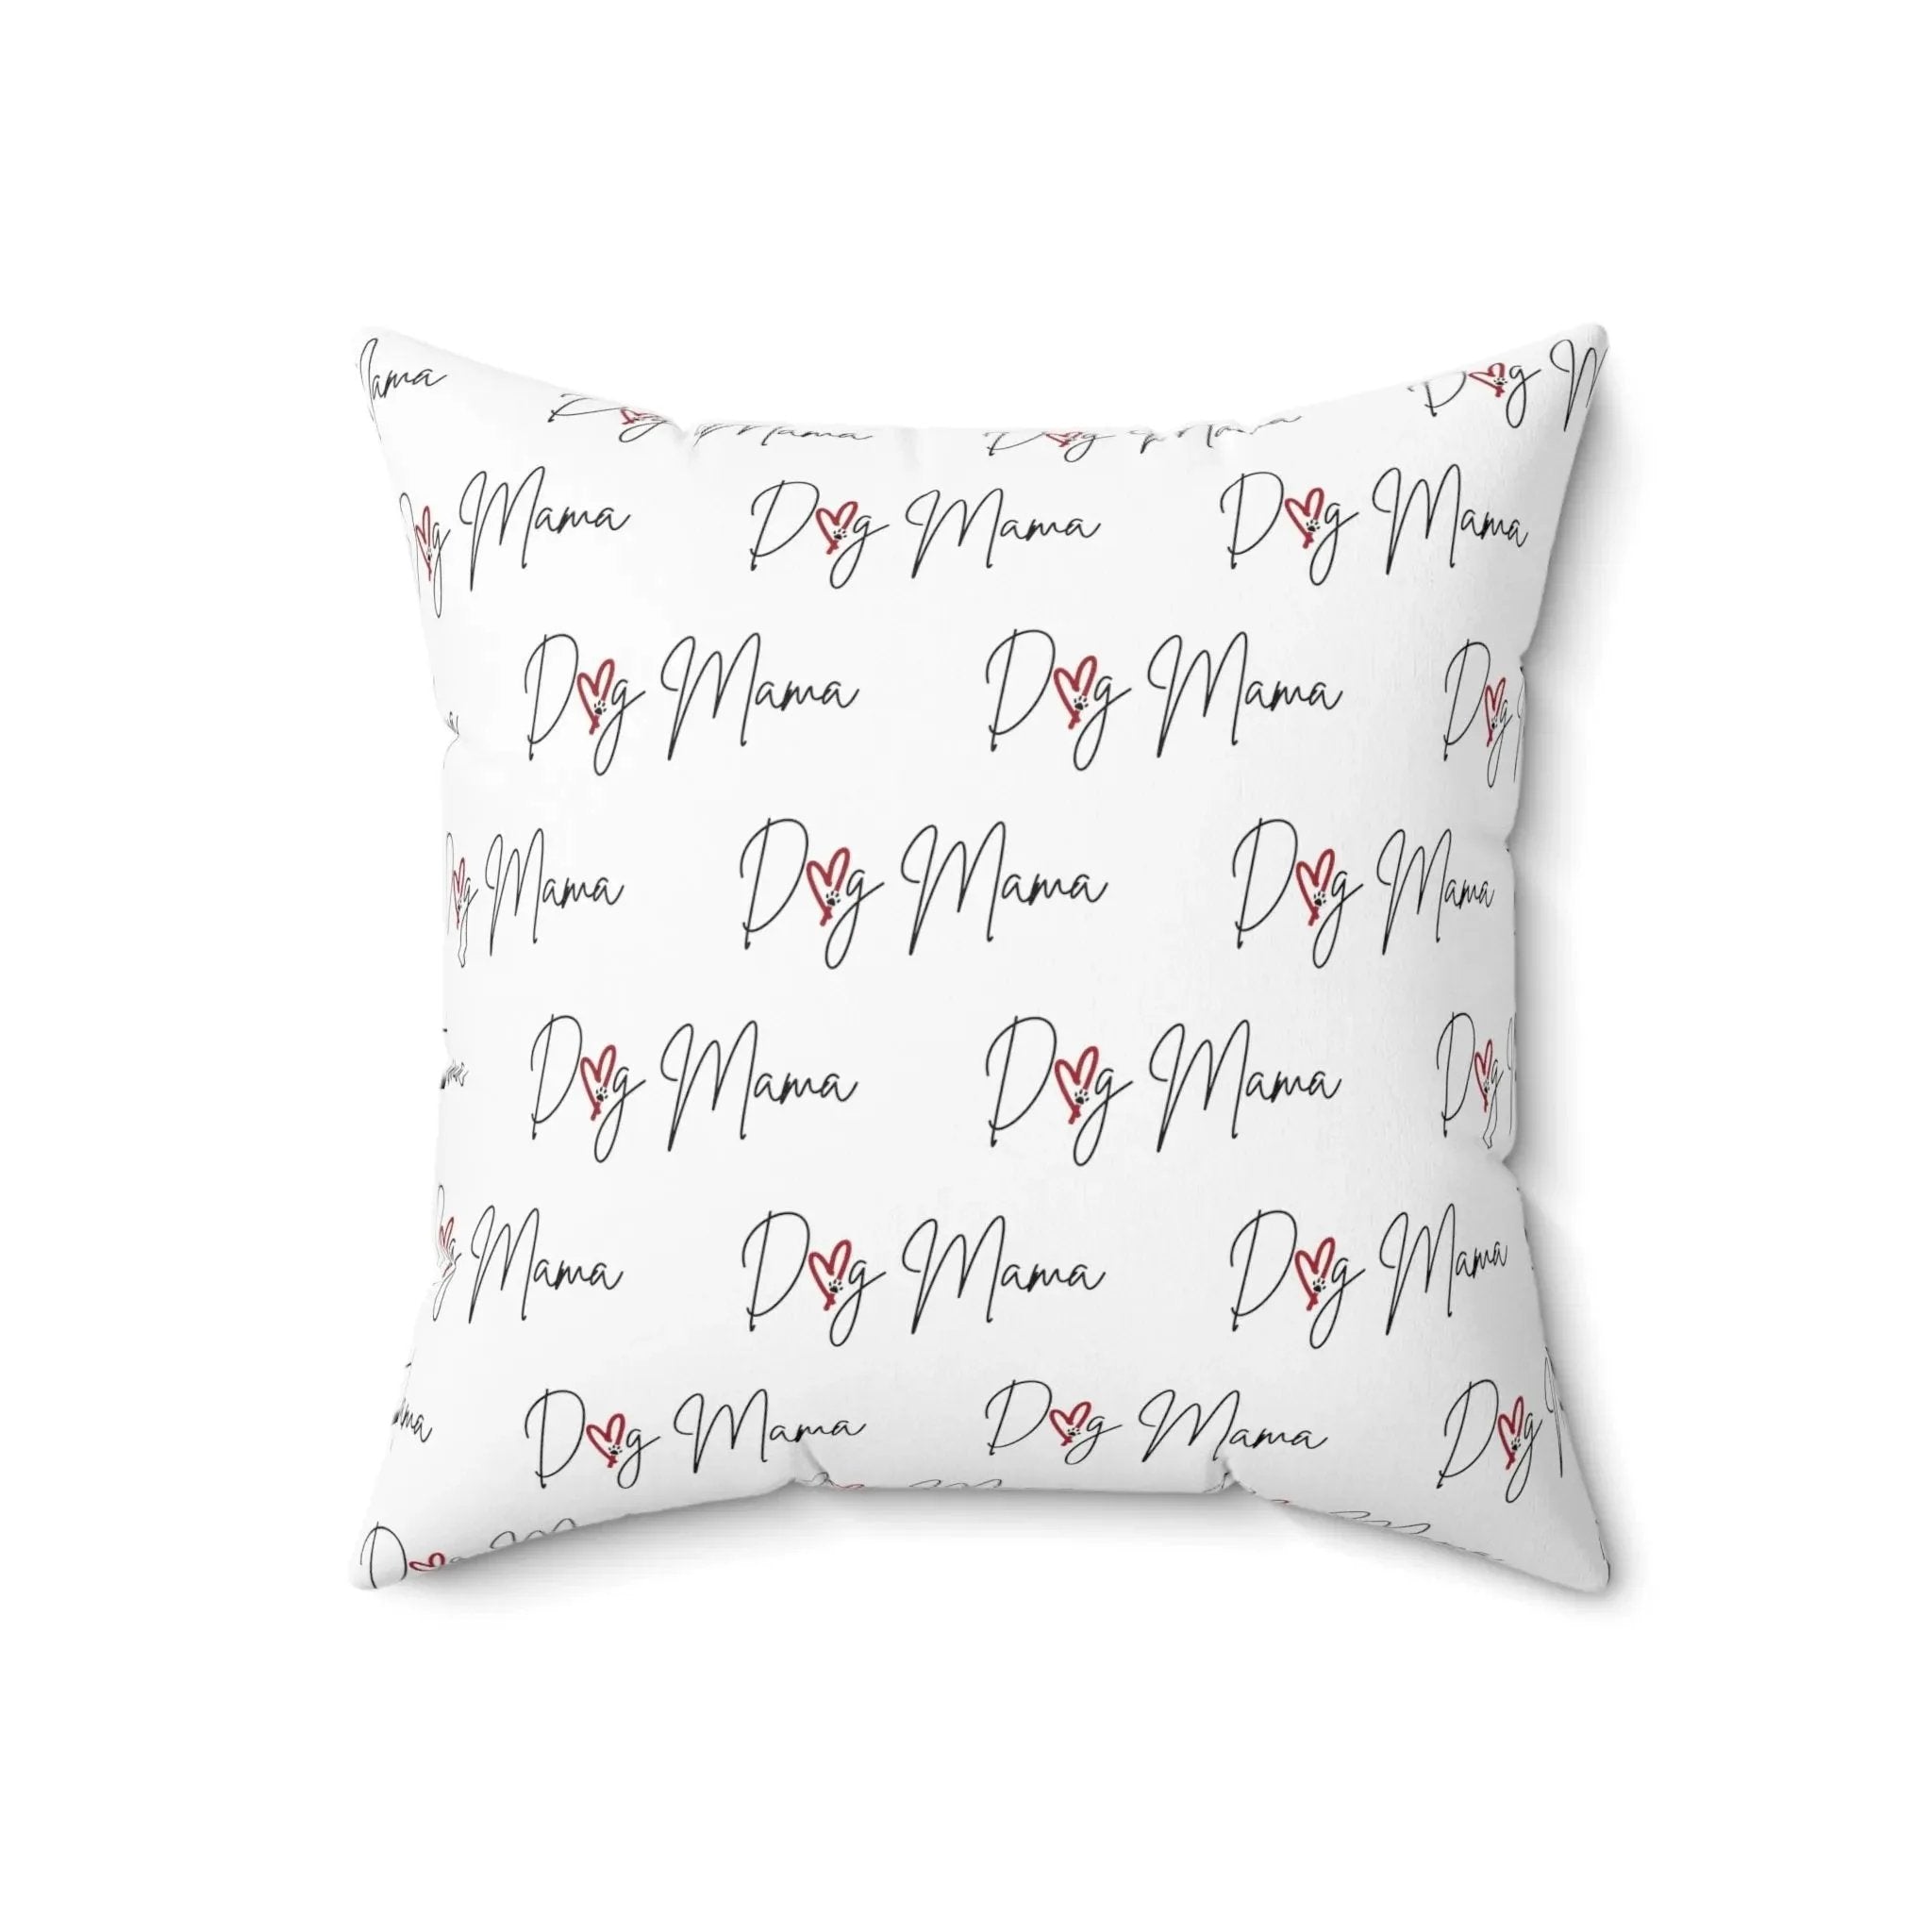 Dog Mama Stylized Square Throw Pillow | 3 Sizes | White Background